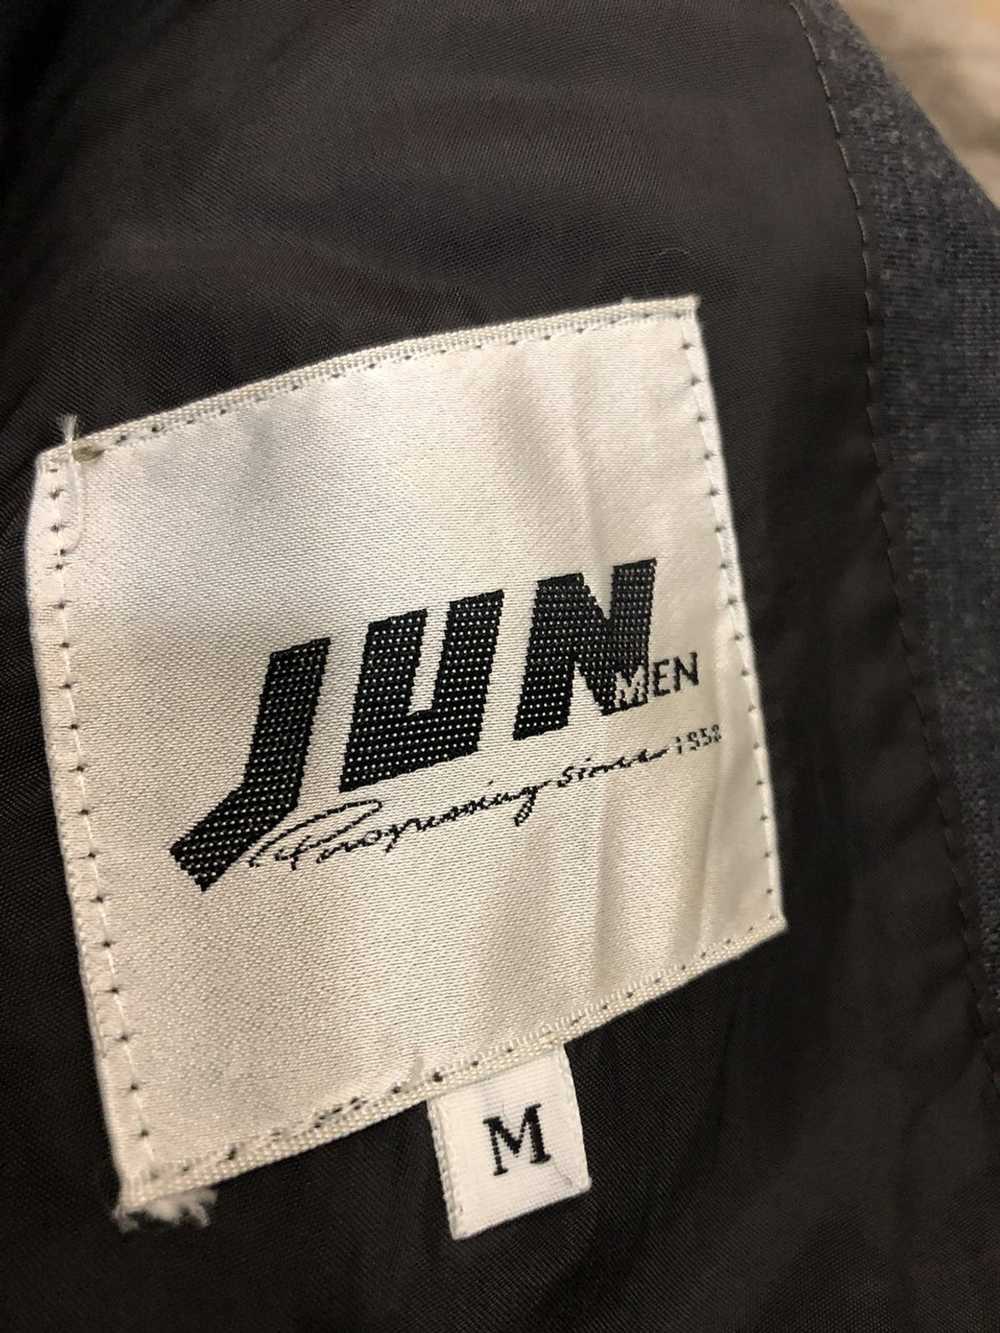 Japanese Brand Jun Men bomber jacket - image 8